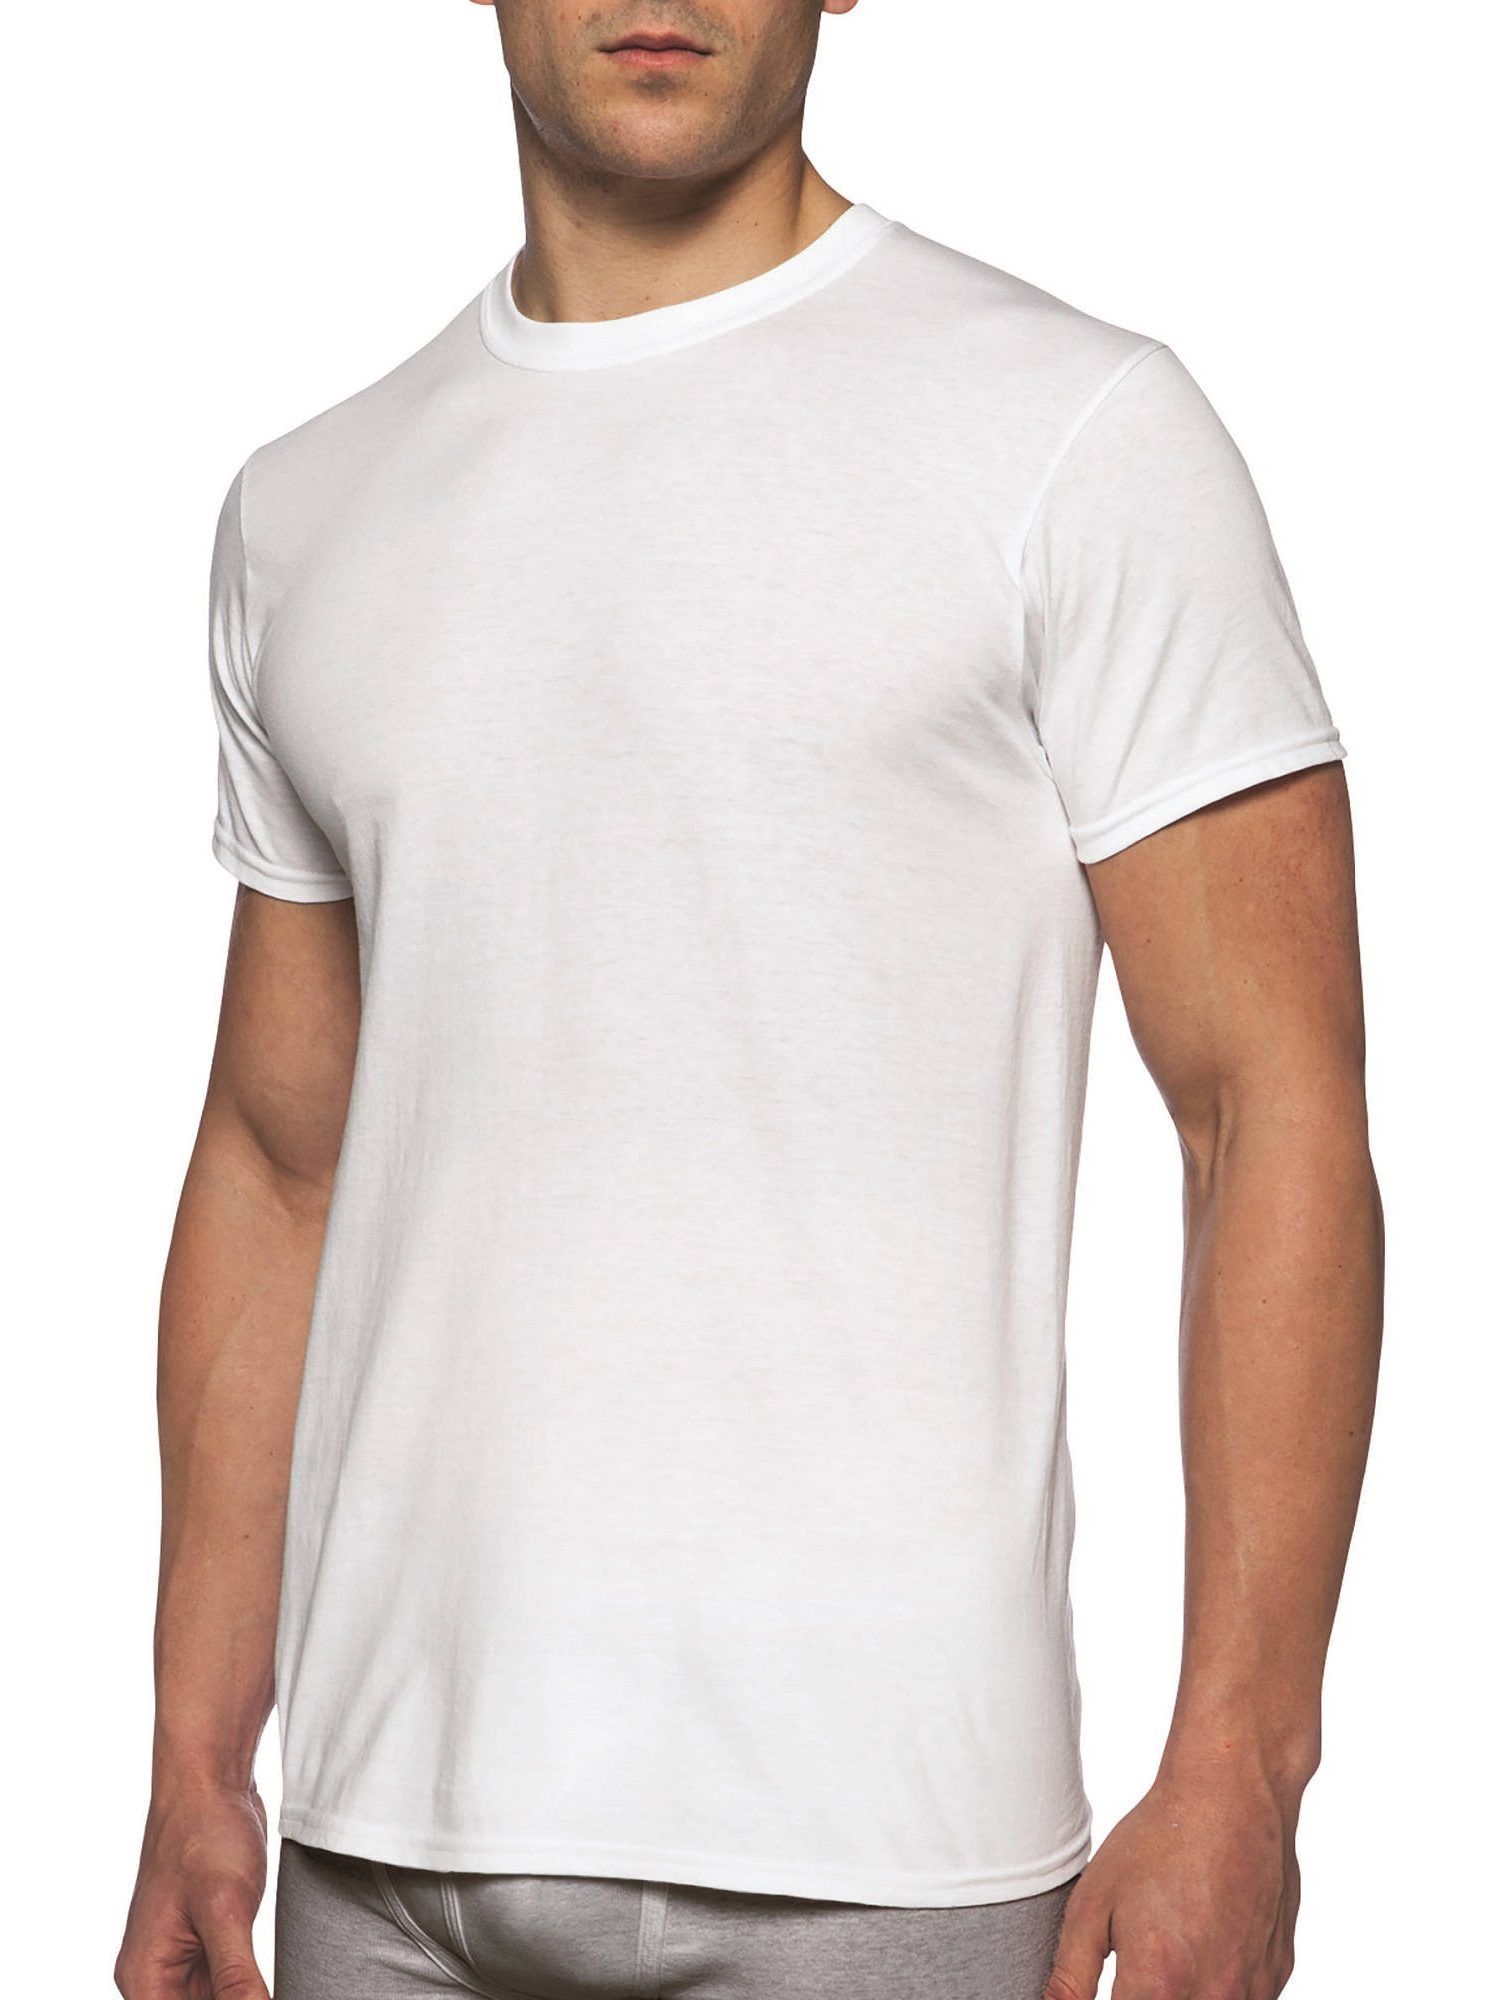 Gildan Adult Men's Tag Free, Crew T-shirts, White, 12-Pack, Sizes S-2XL ...